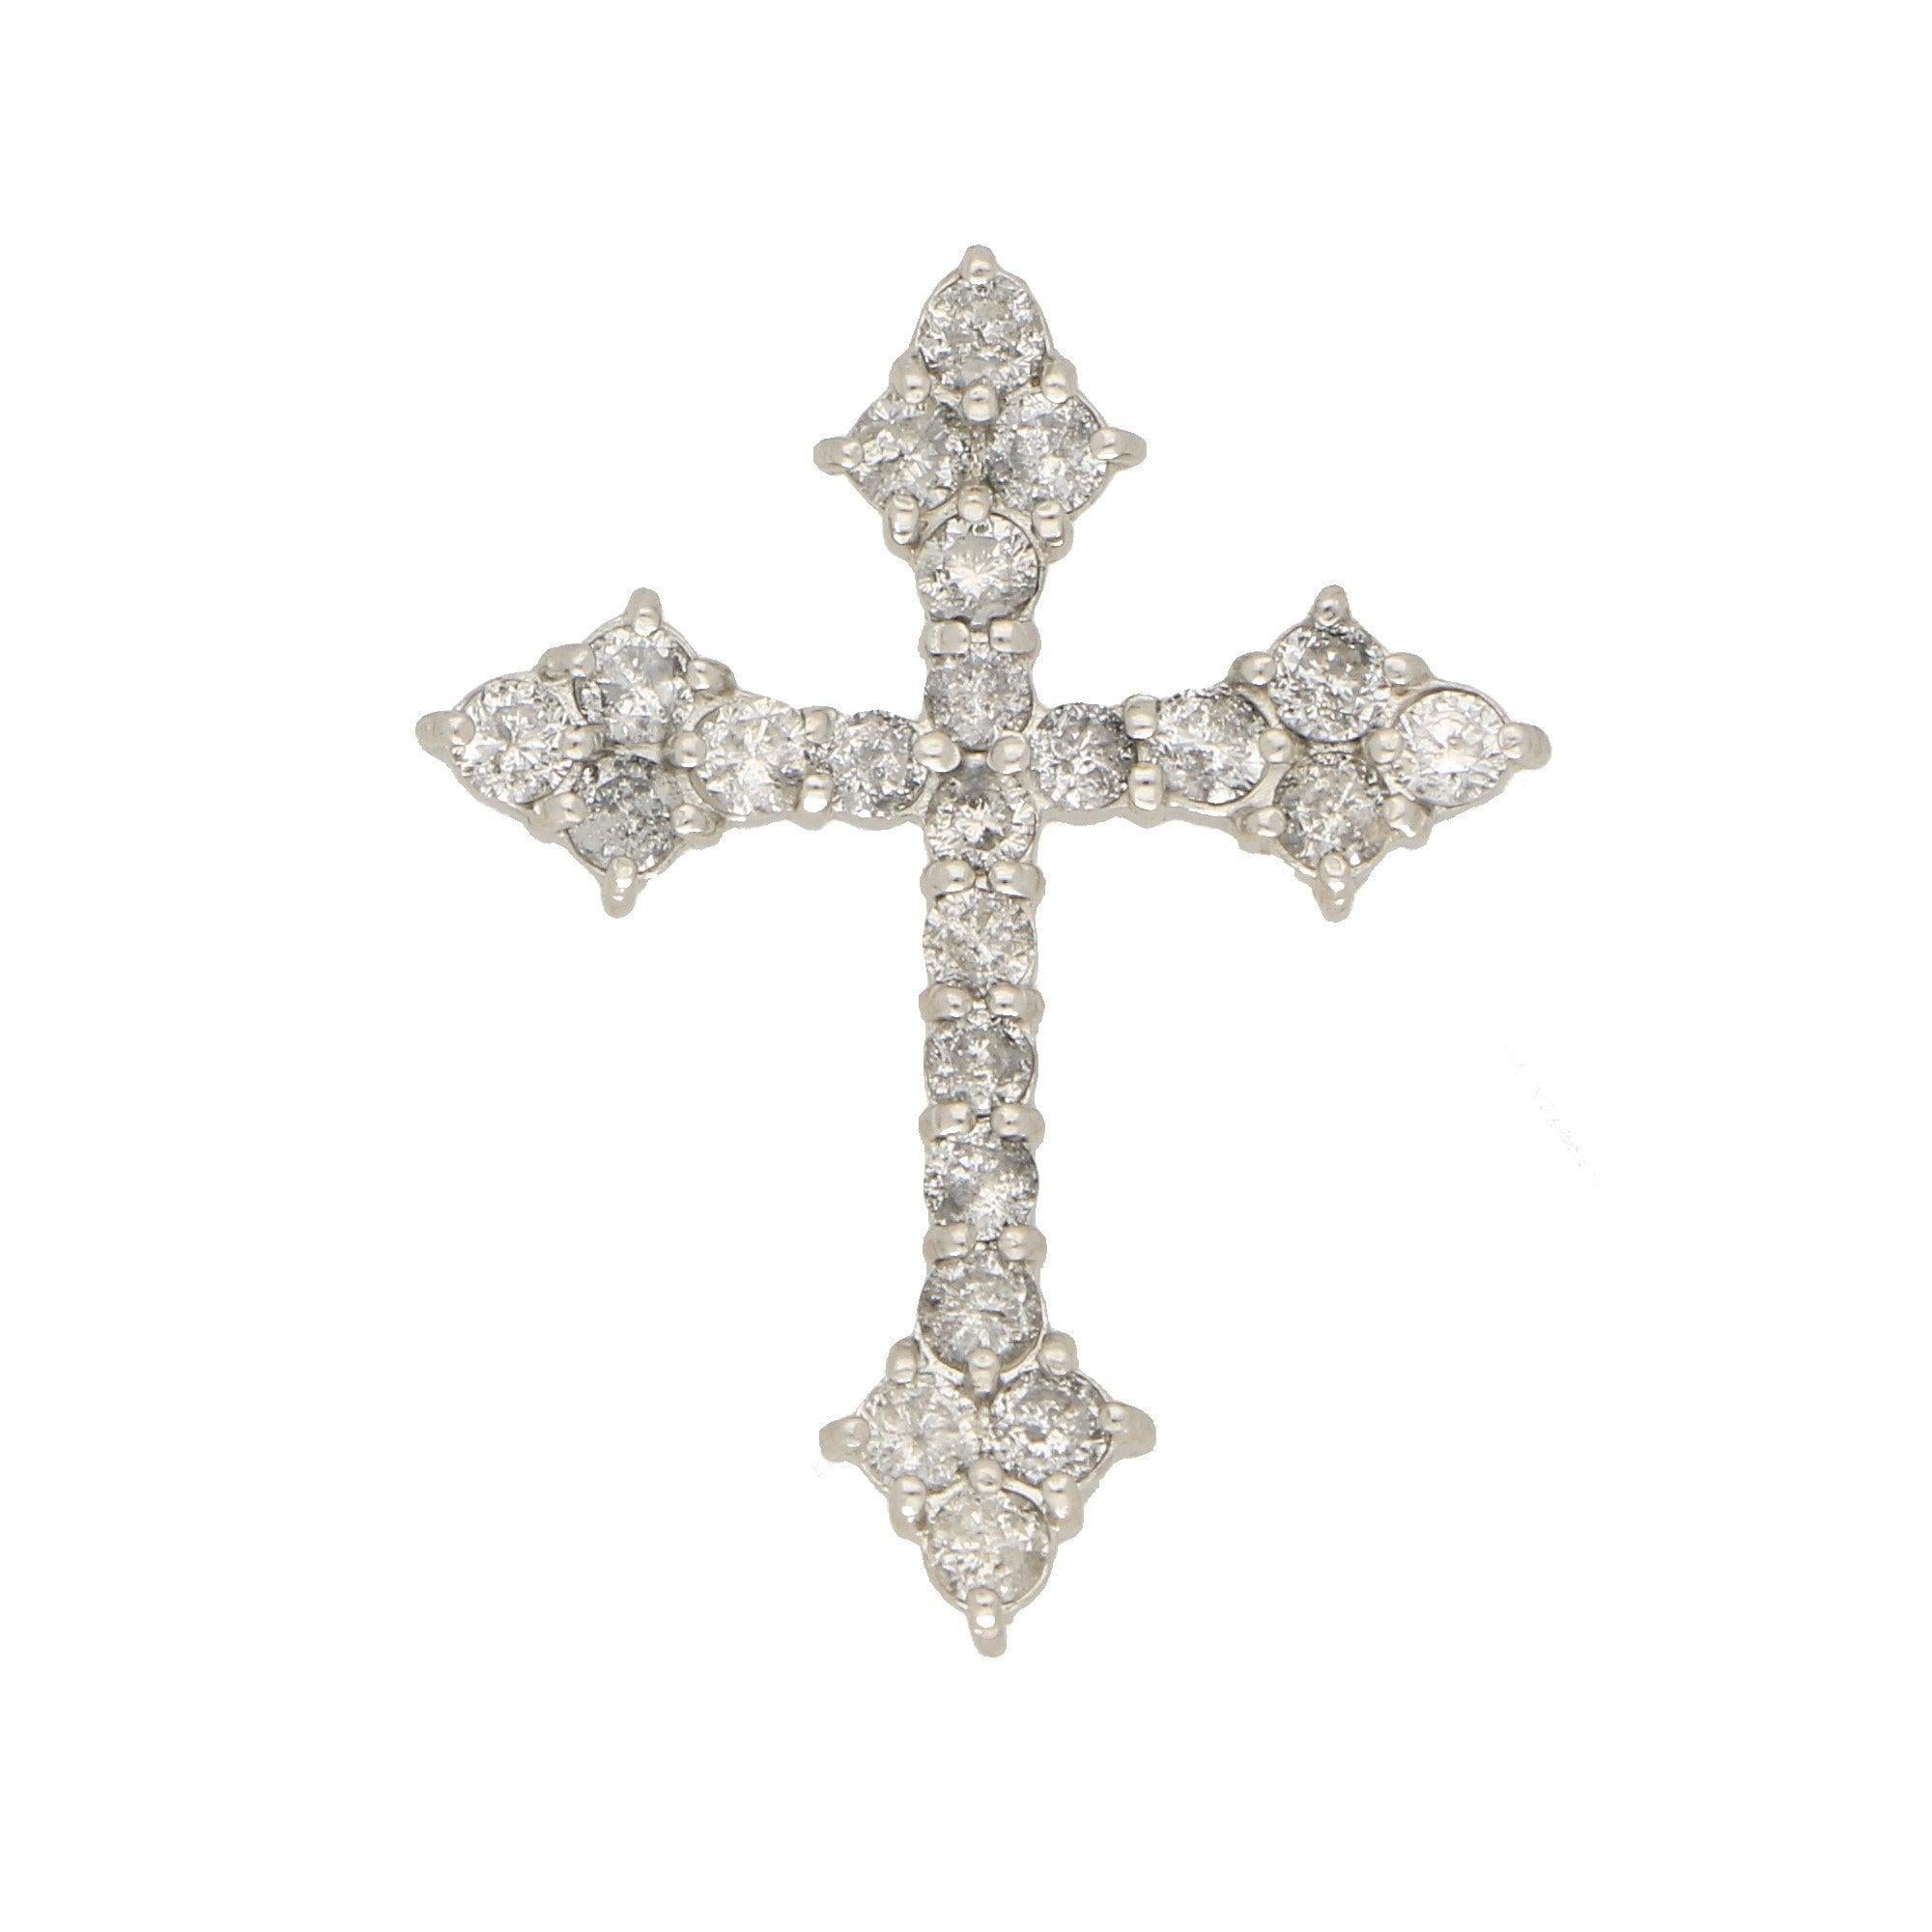 Round Cut Stylized Diamond Cross Pendant in Platinum 1 Carat Total